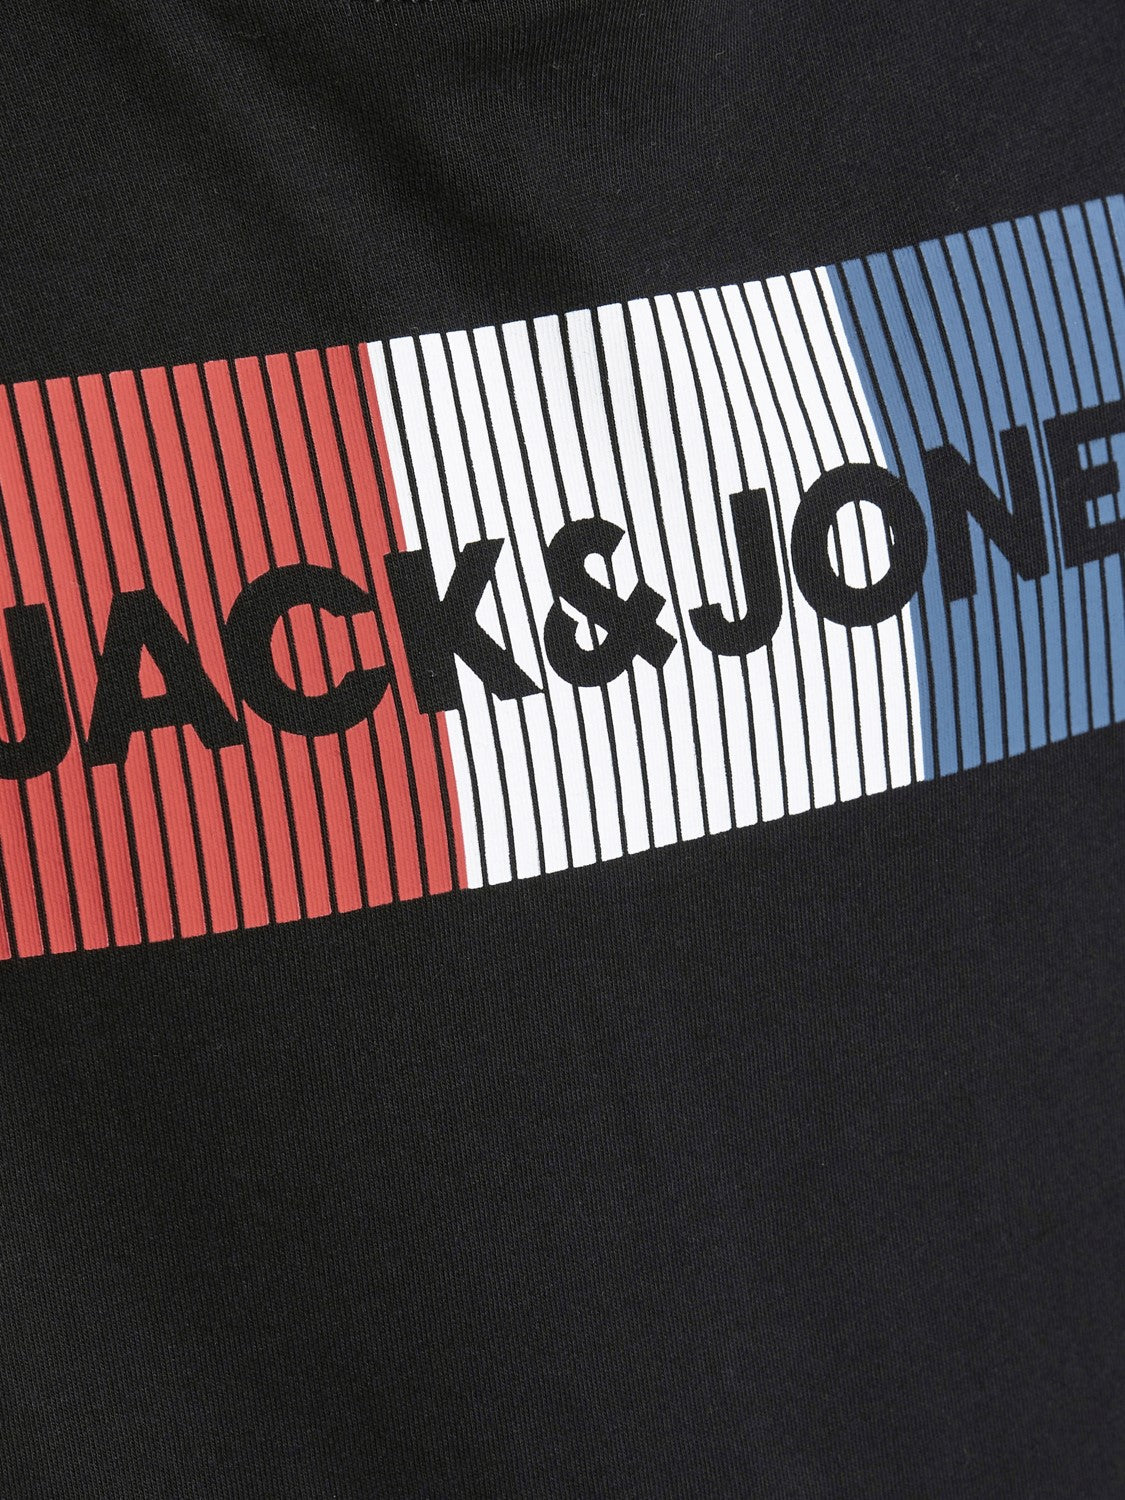 JUNIOR JACK & JONES T-SHIRT CON LOGO - Col. nero